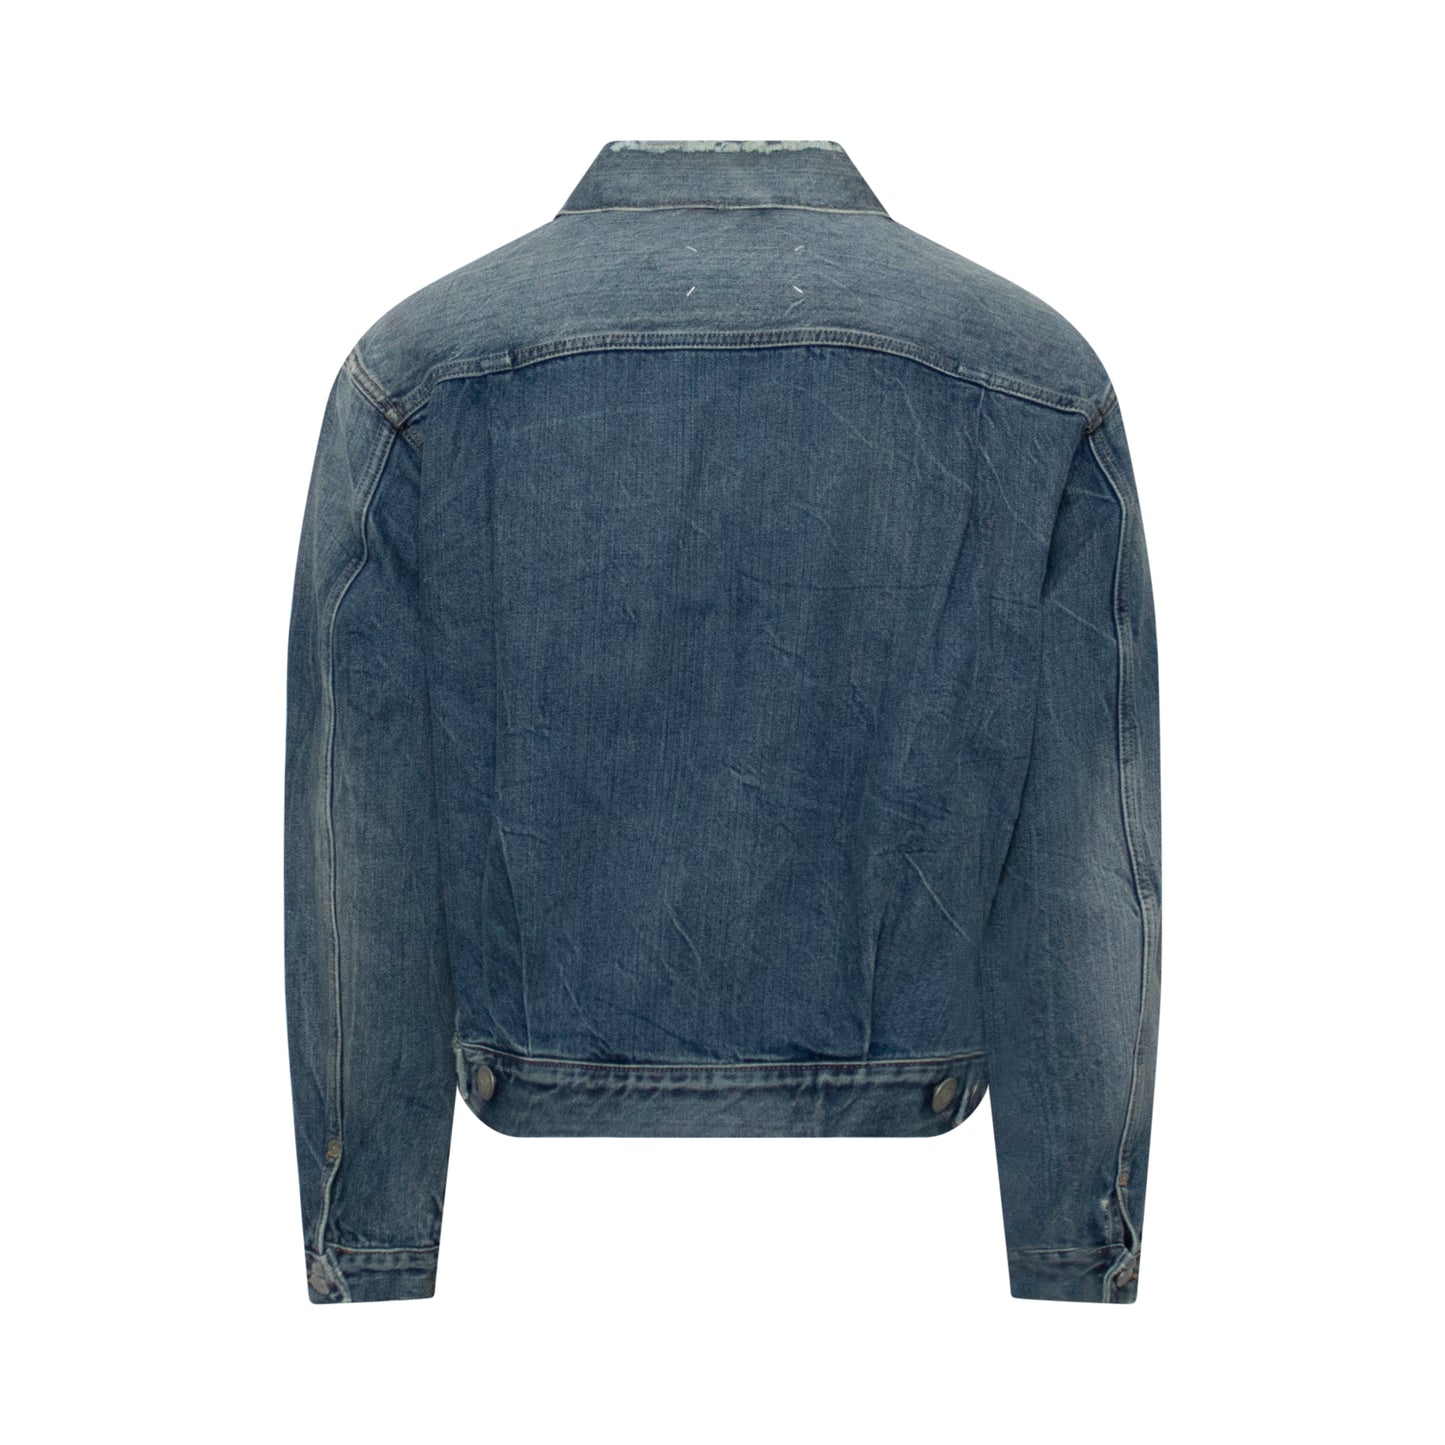 Distressed Denim Jacket in Vintage Indigo